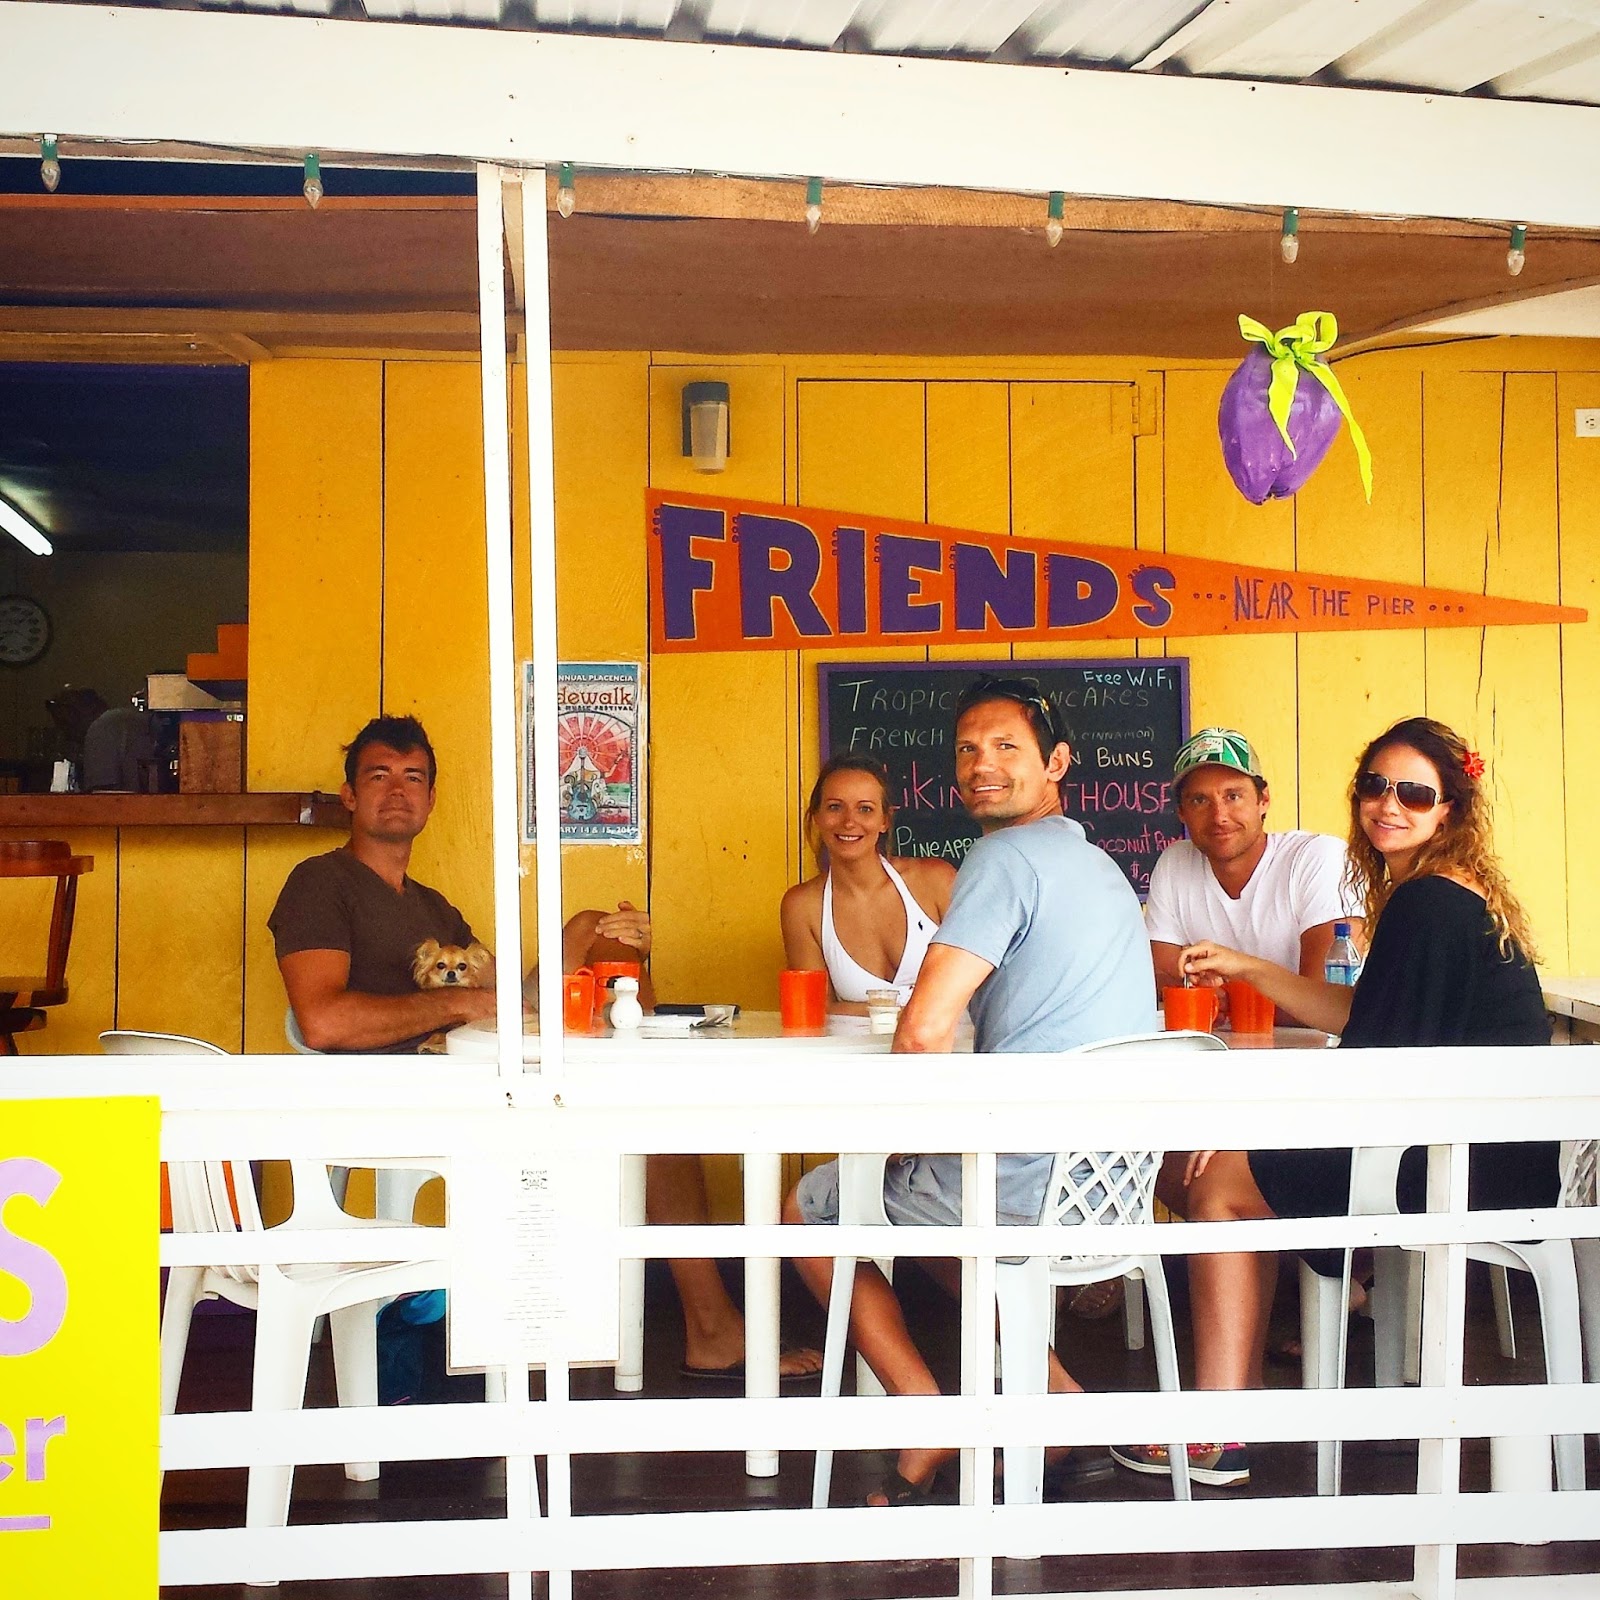 Remax Vip Belize: Breakfast at Friends